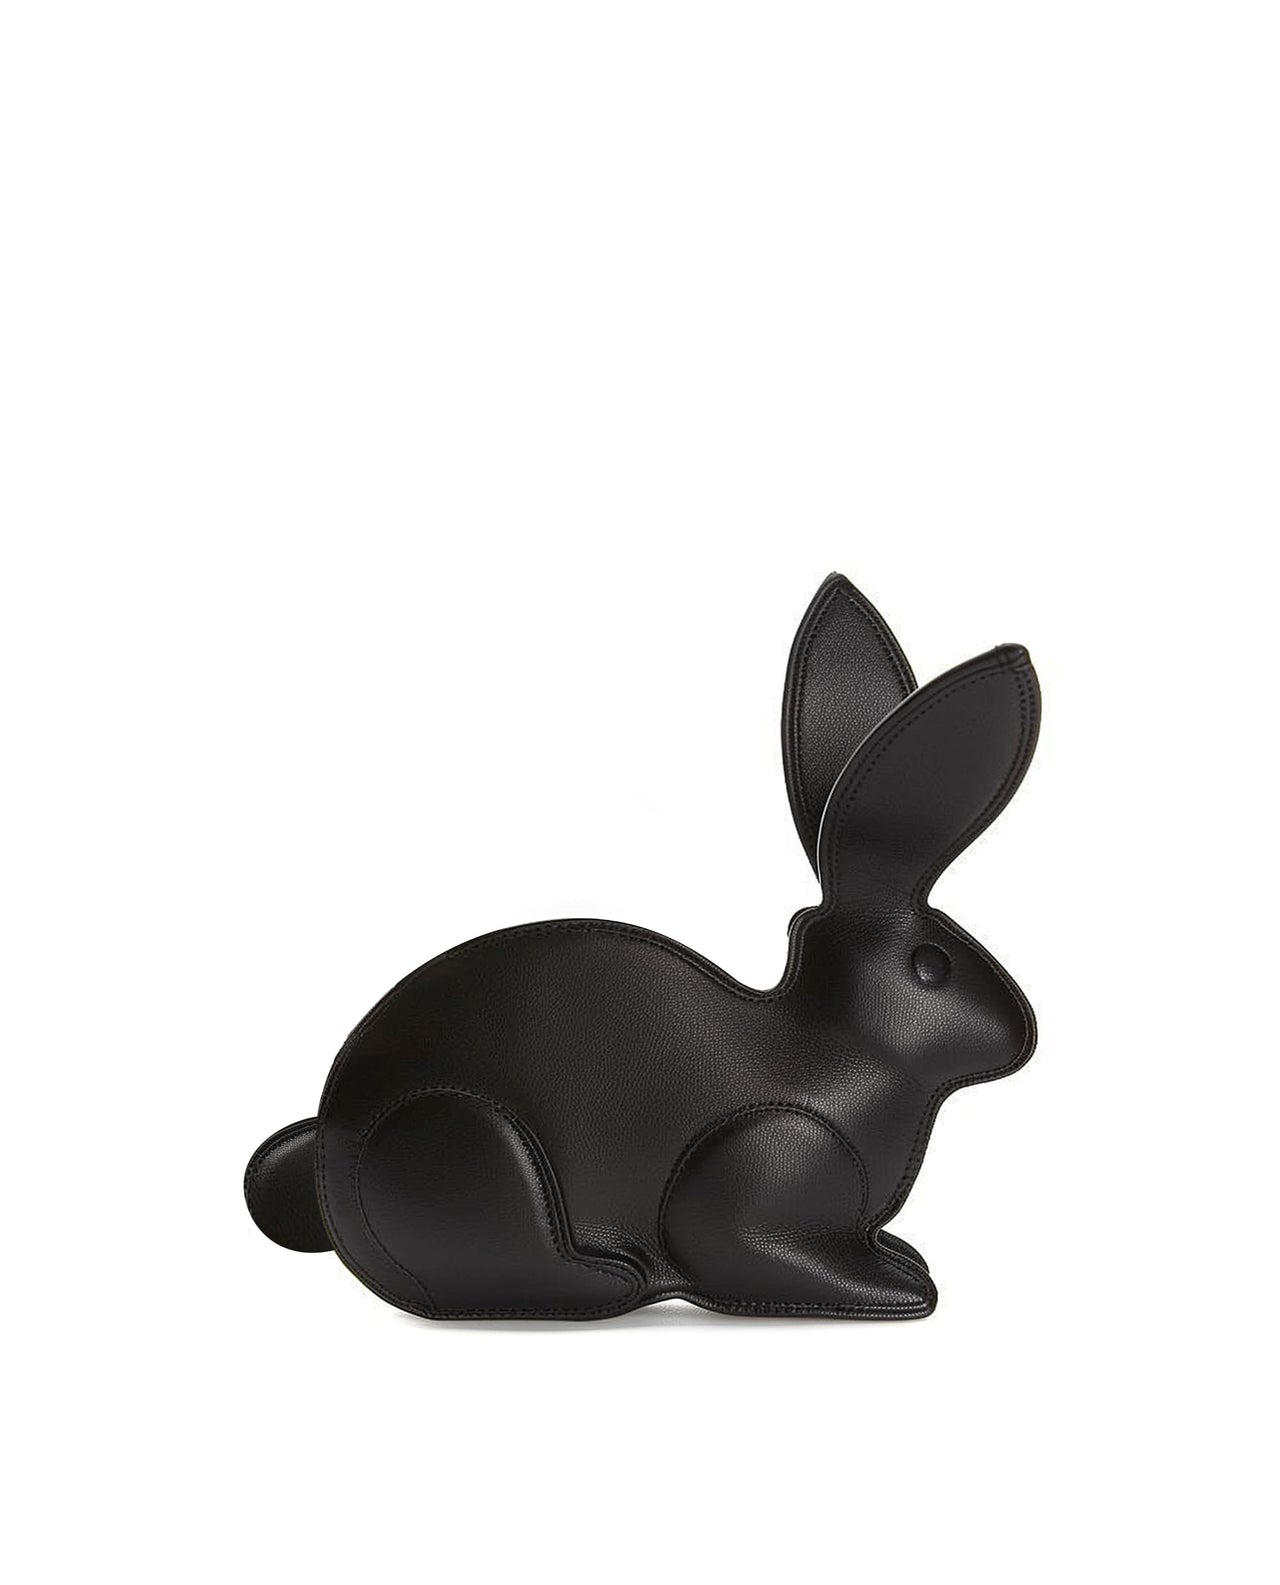 Black bunny shaped clutch